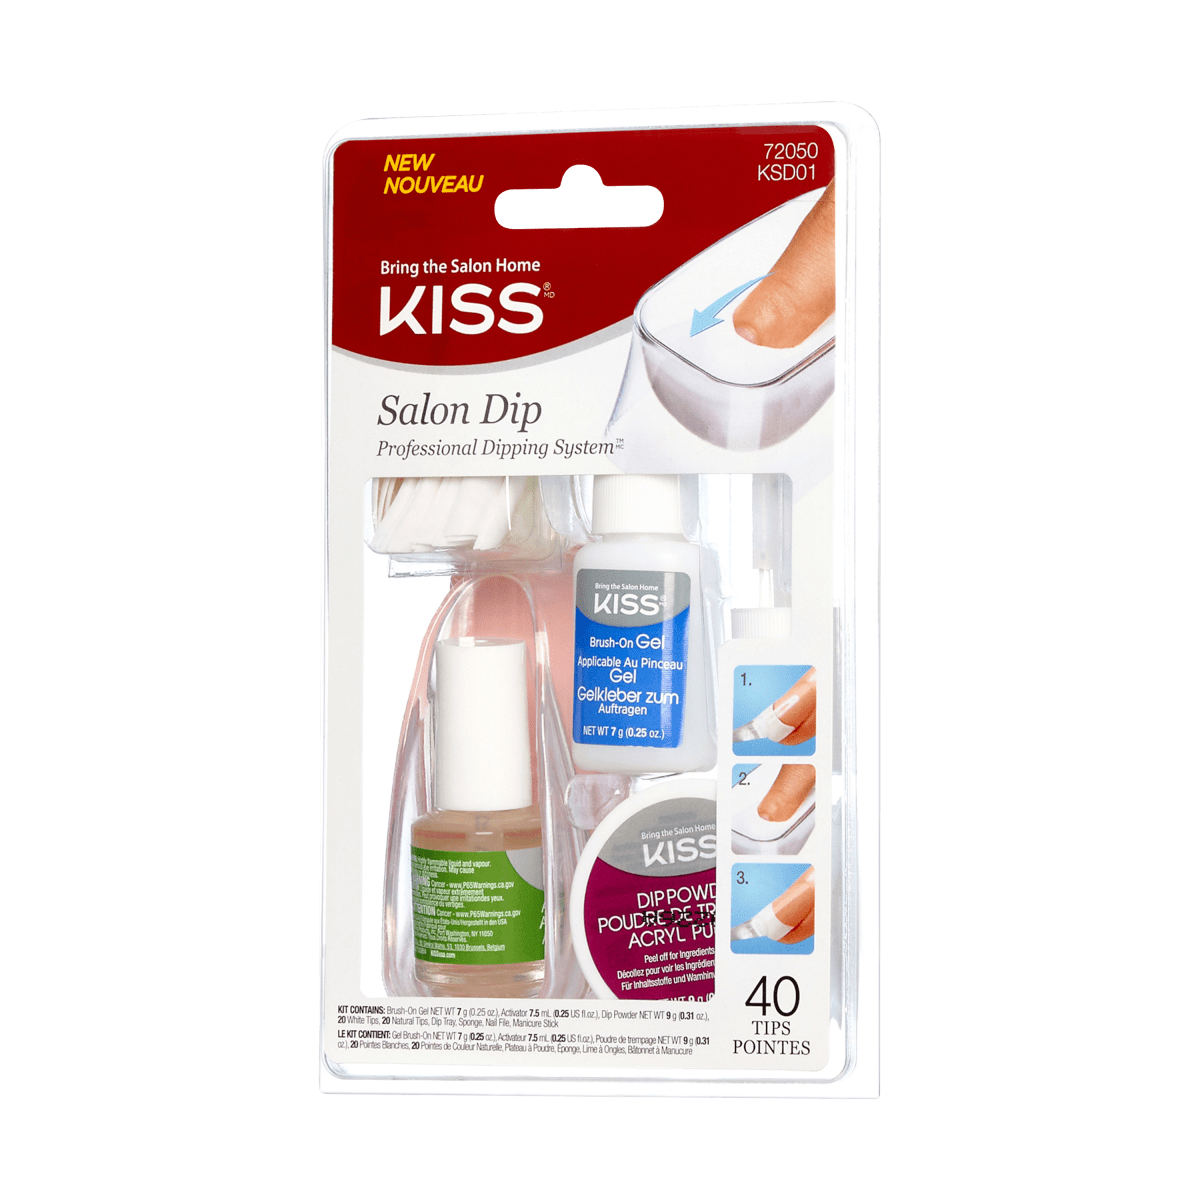 KISS Salon Dip, DIY dip powder nail kit professional dipping system